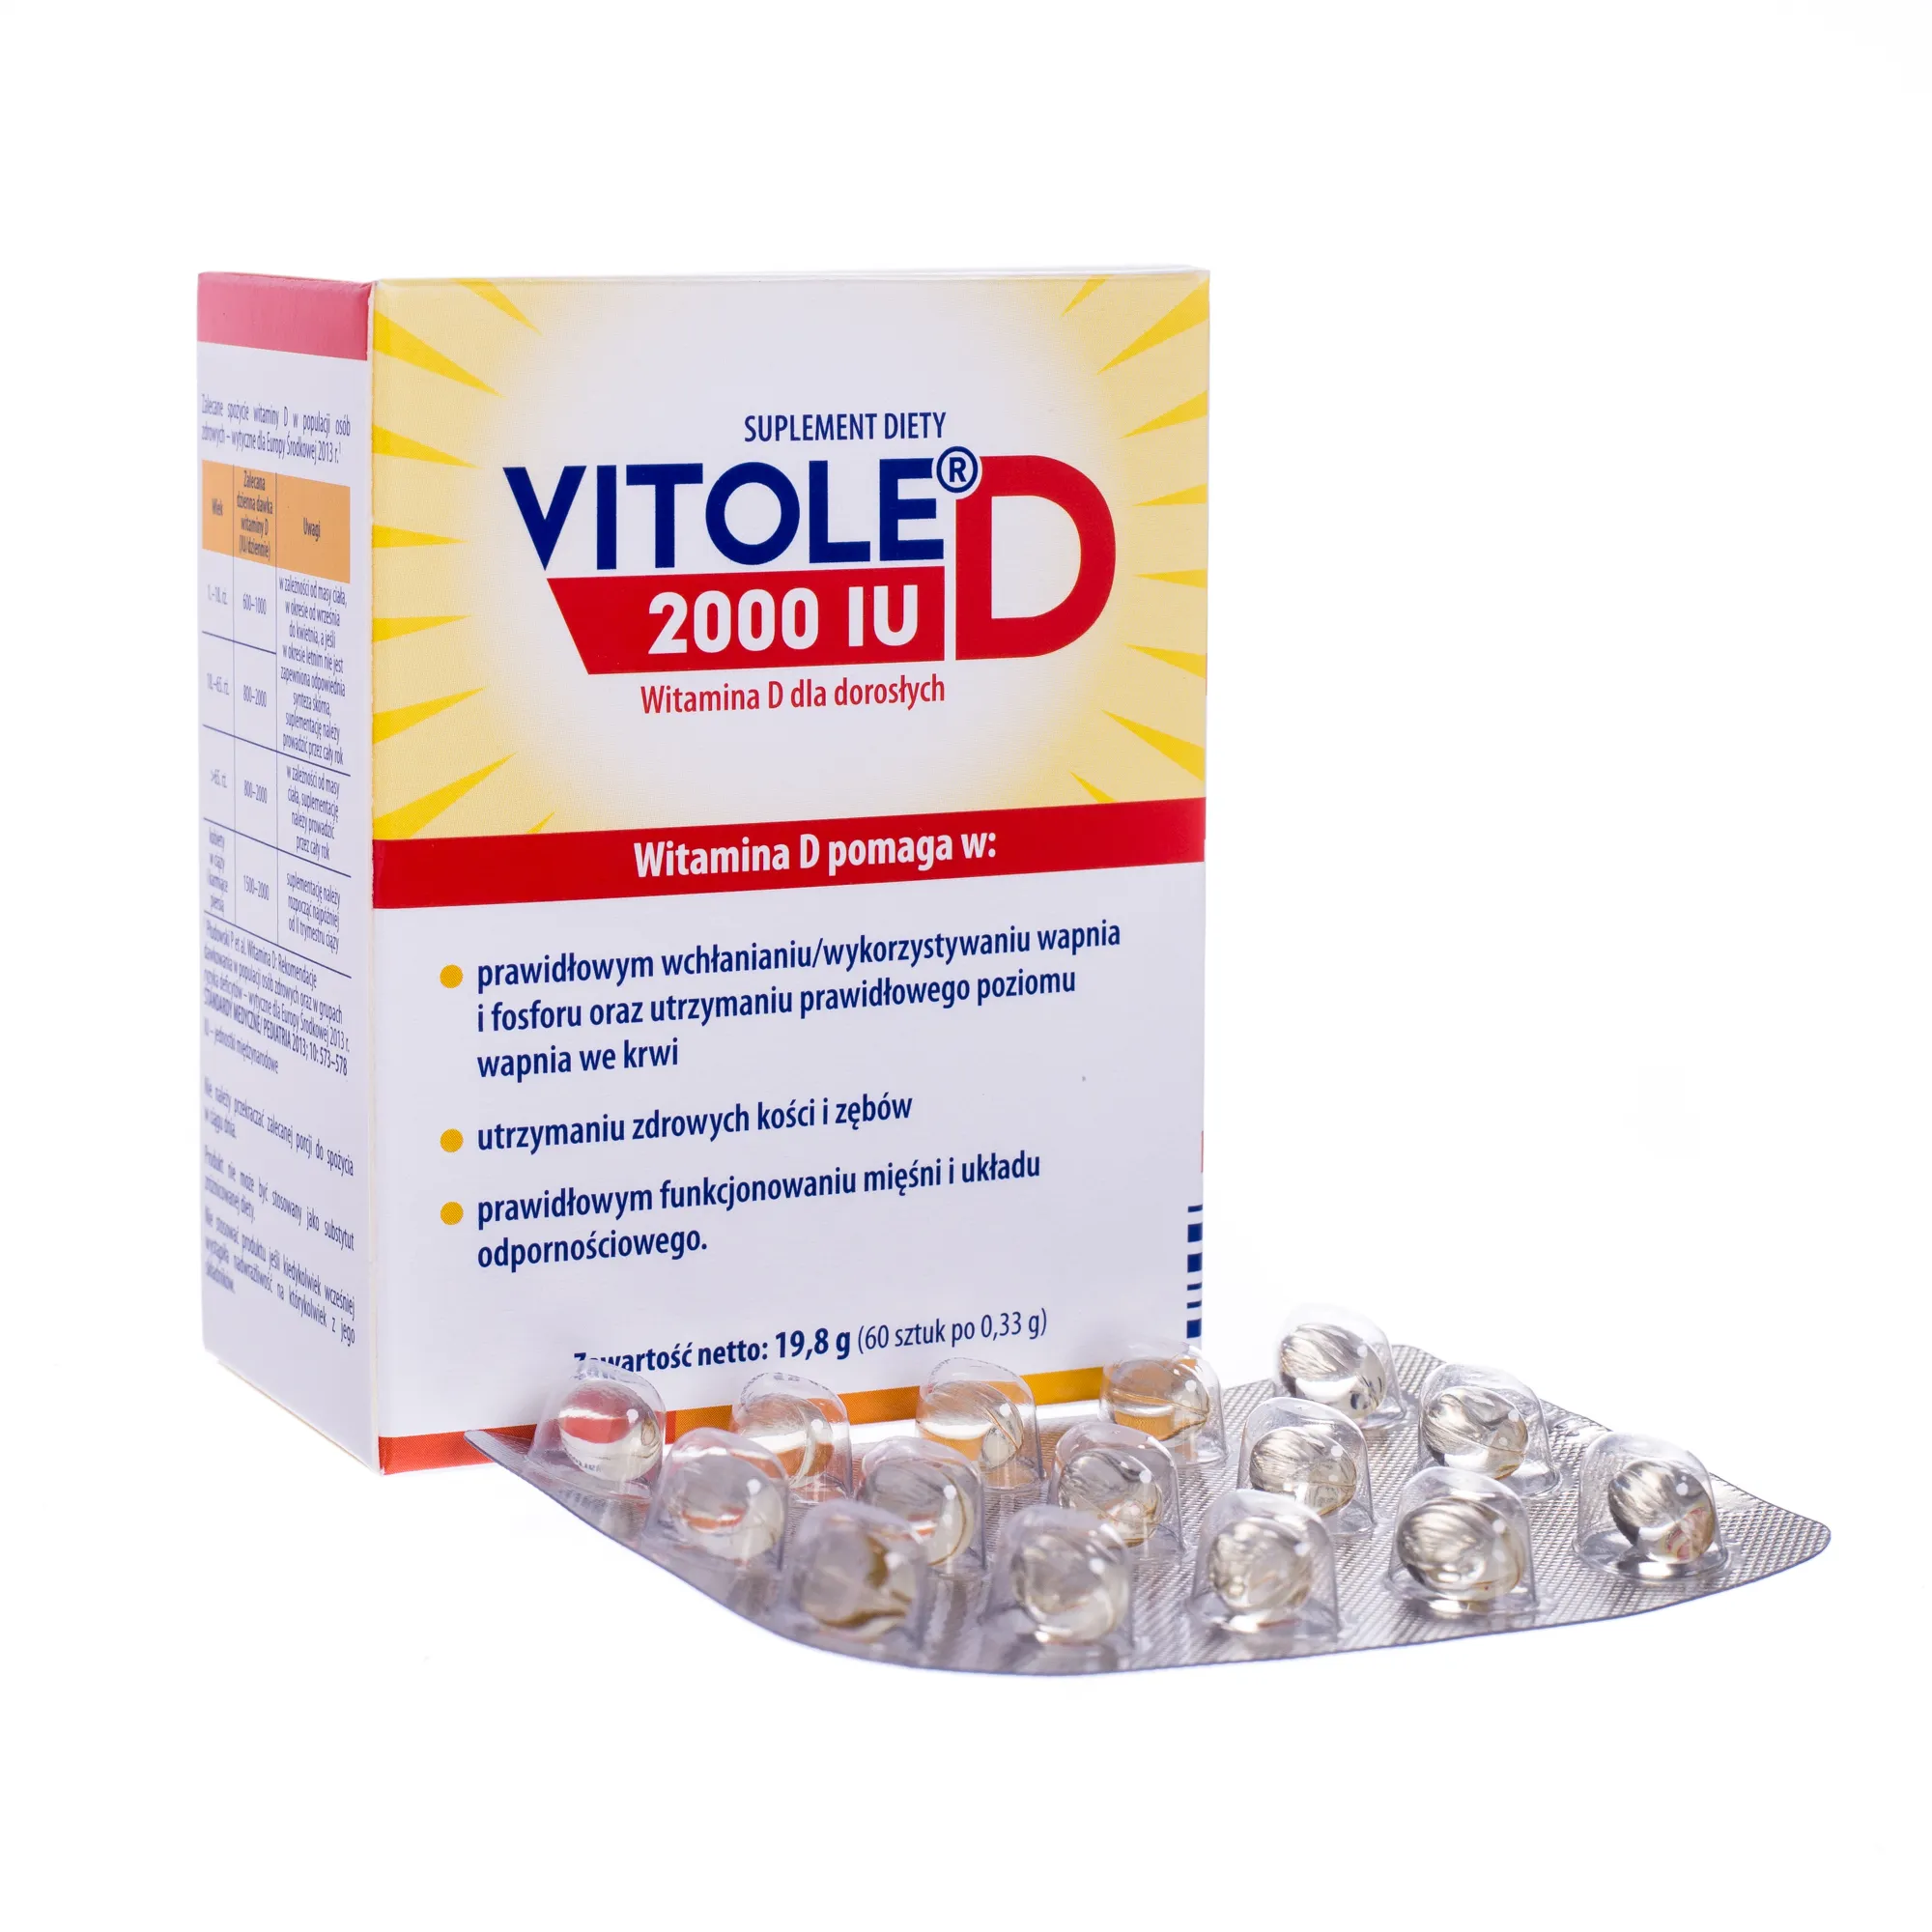 Vitole D 2 000 IU., suplement diety, 60 kapsułek miękkich 